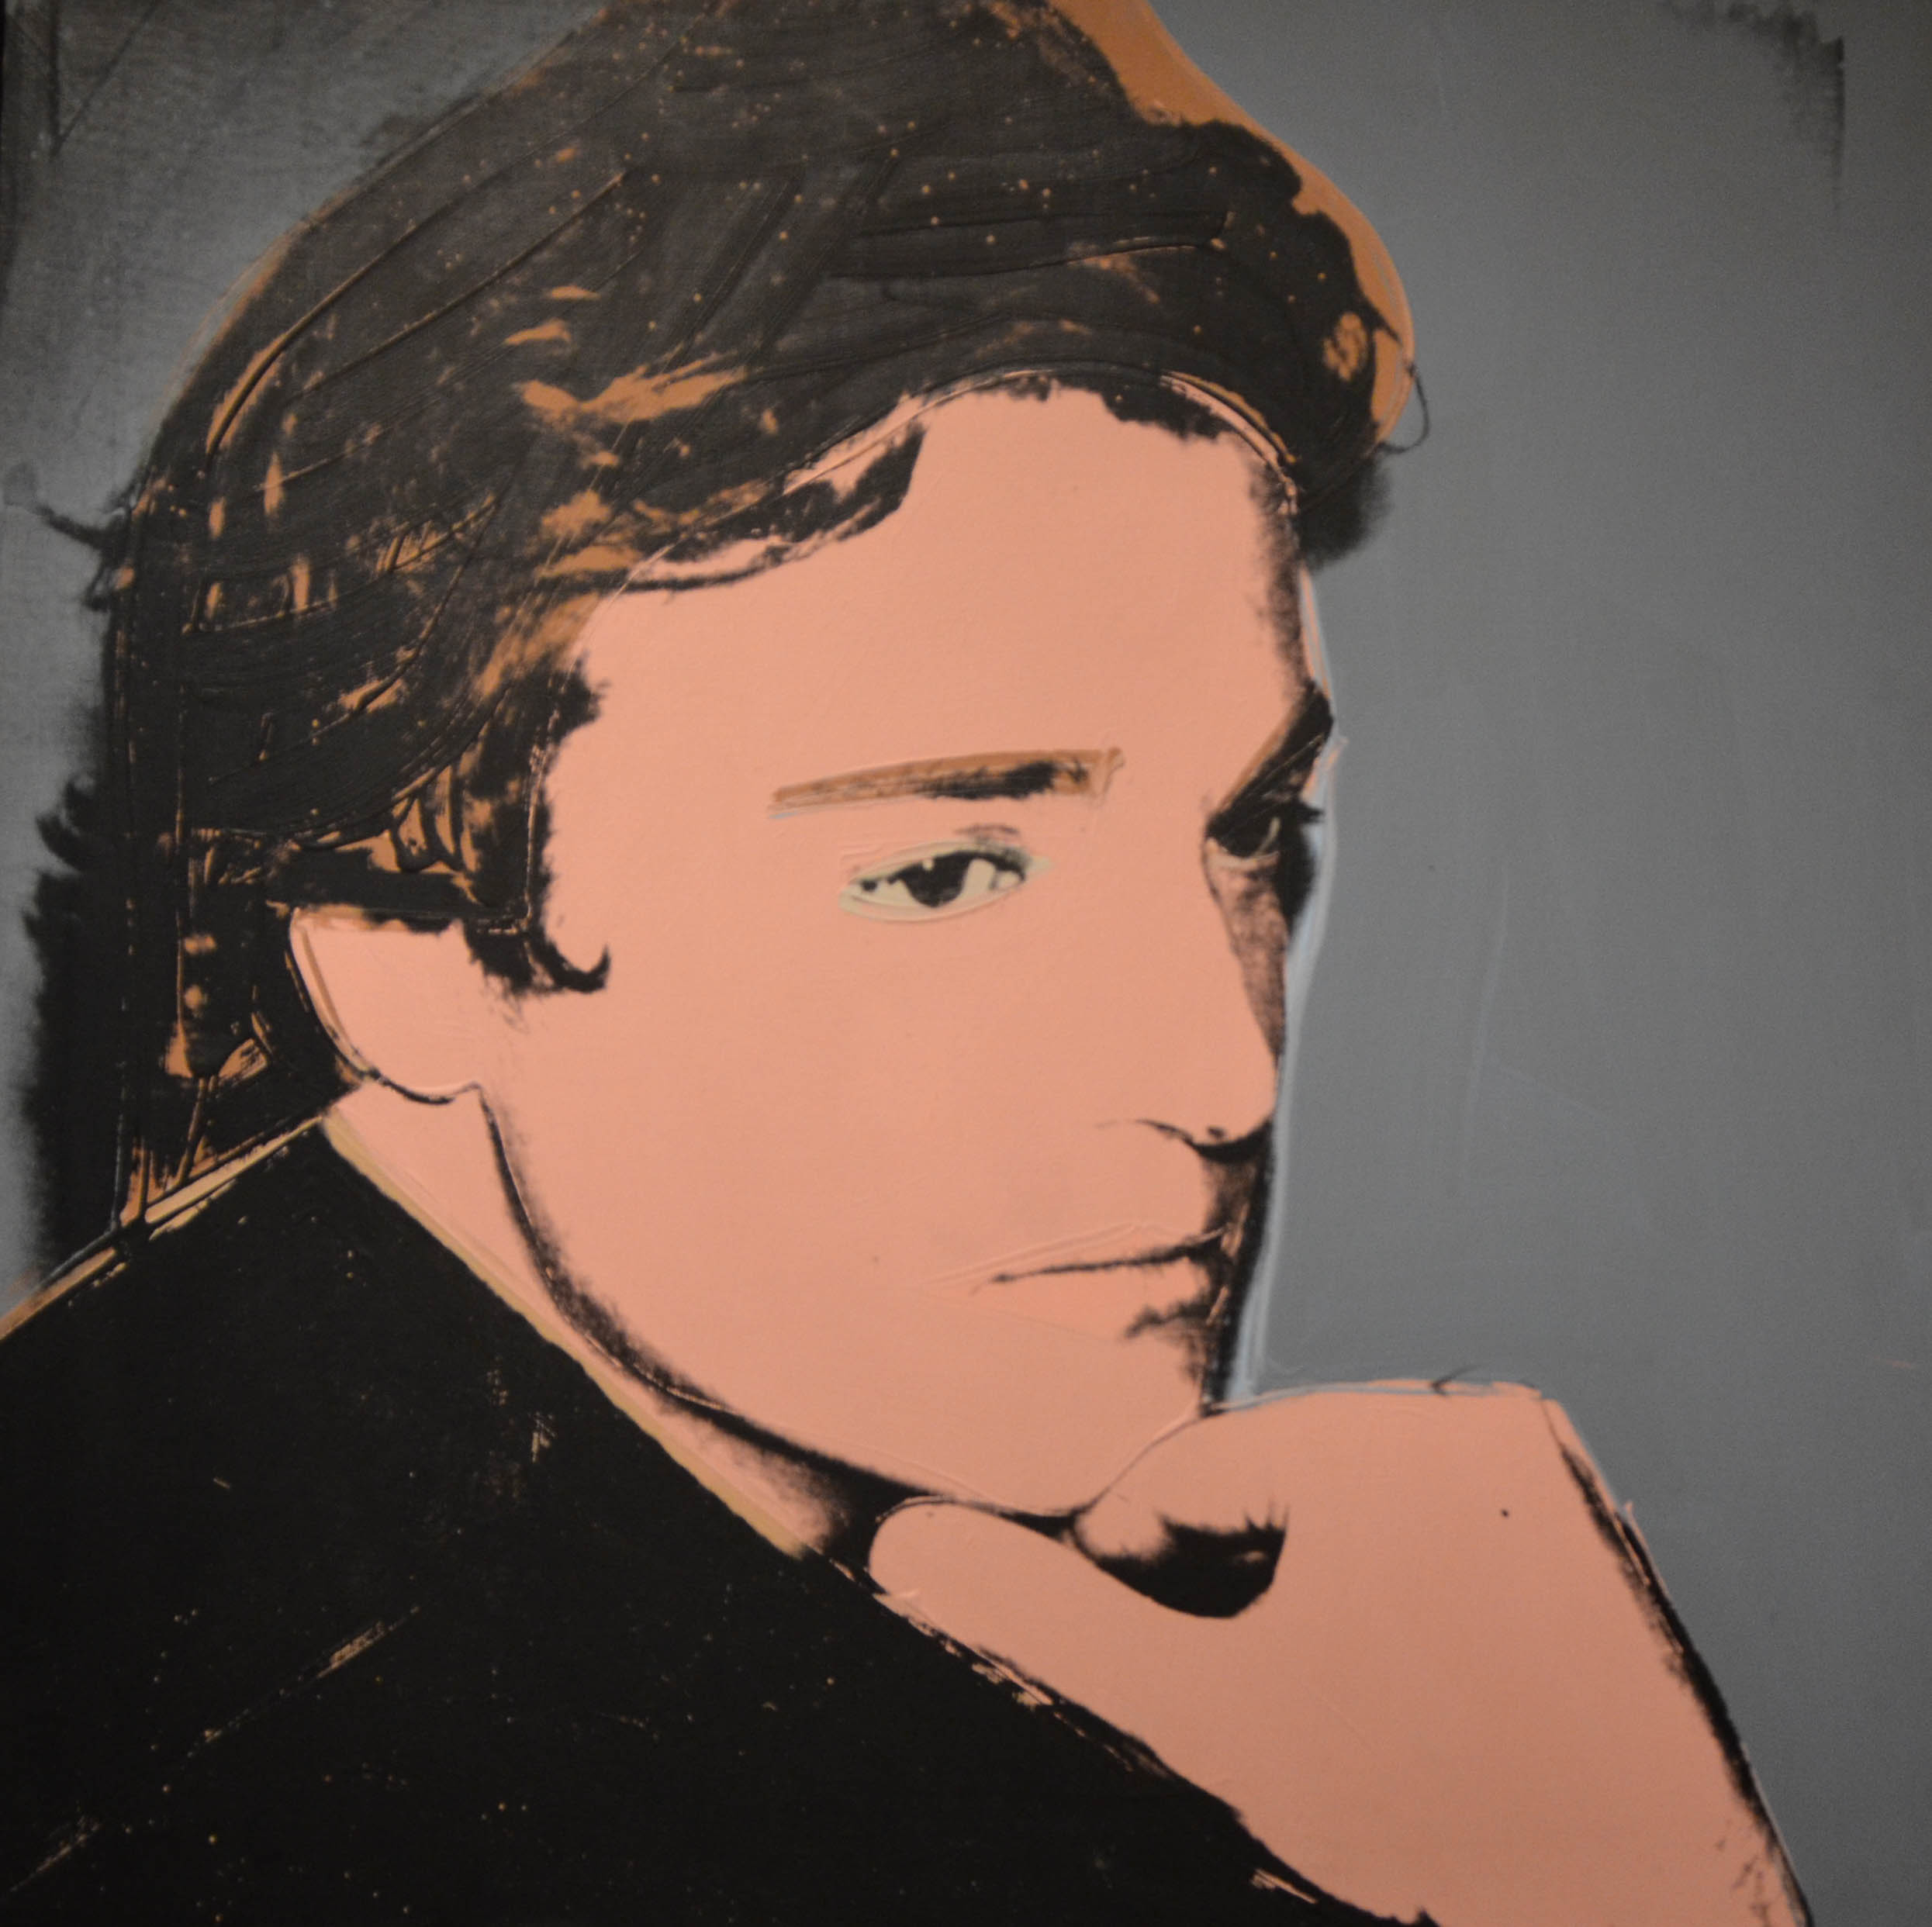 Jamie Wyeth as depicted by Warhol.